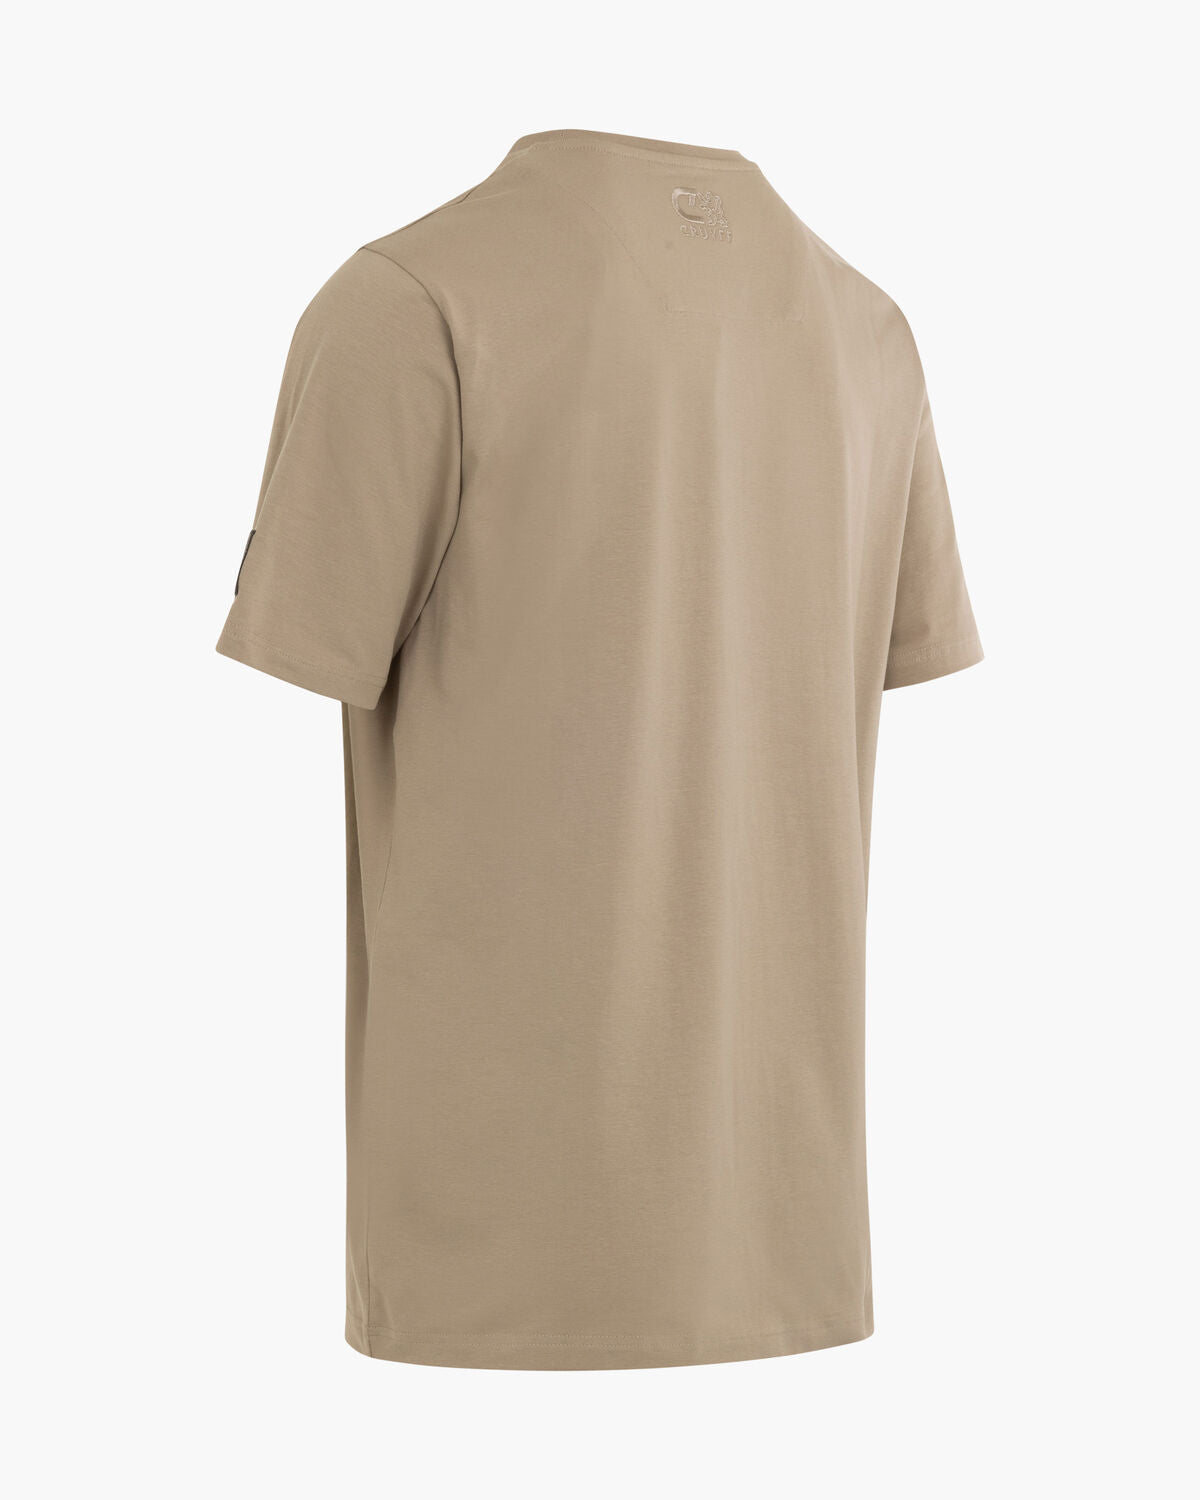 Cruyff Tiva T-Shirt Sand